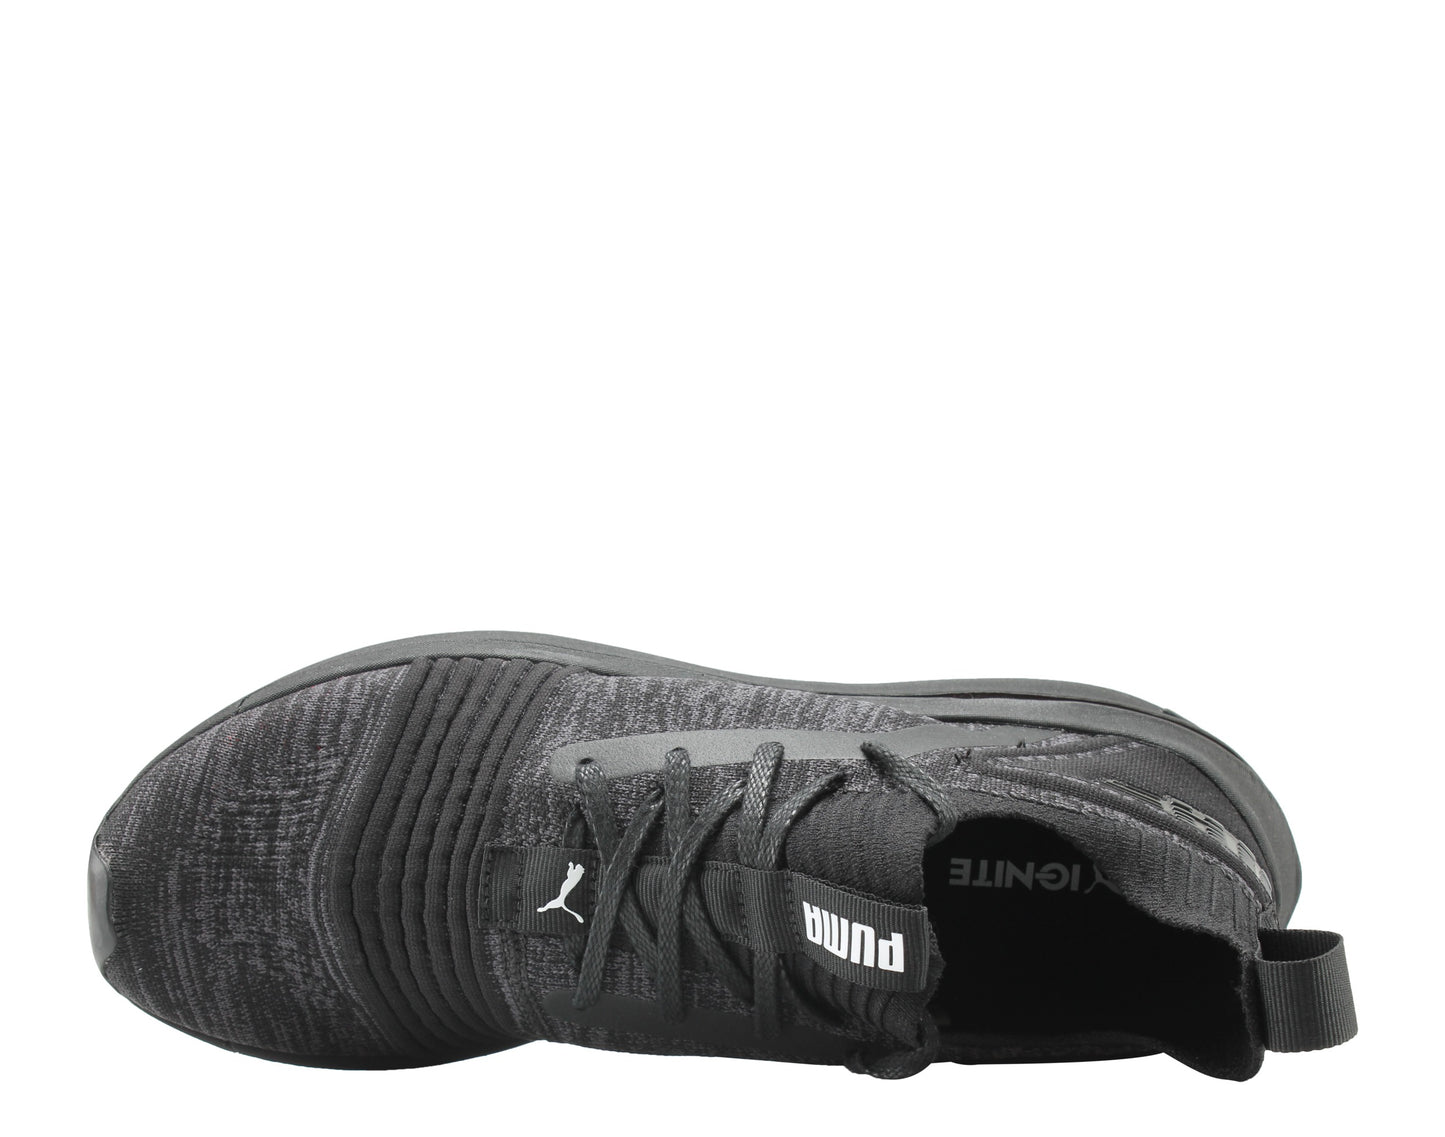 Puma Ignite Limitless SR EvoKnit Men's Running Shoes